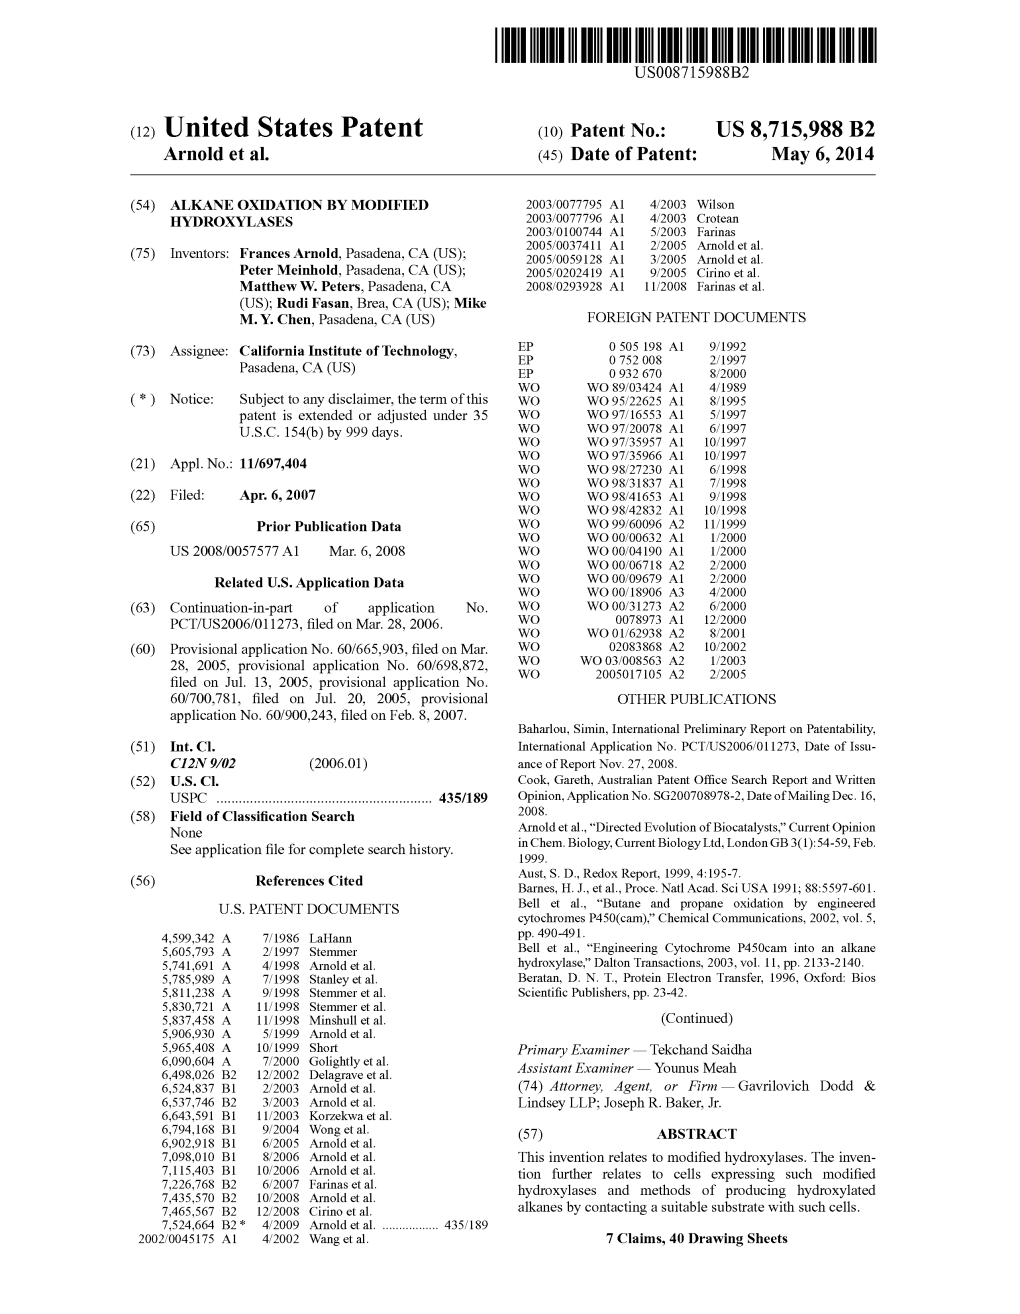 (12) United States Patent (10) Patent No.: US 8,715,988 B2 Arnold Et Al